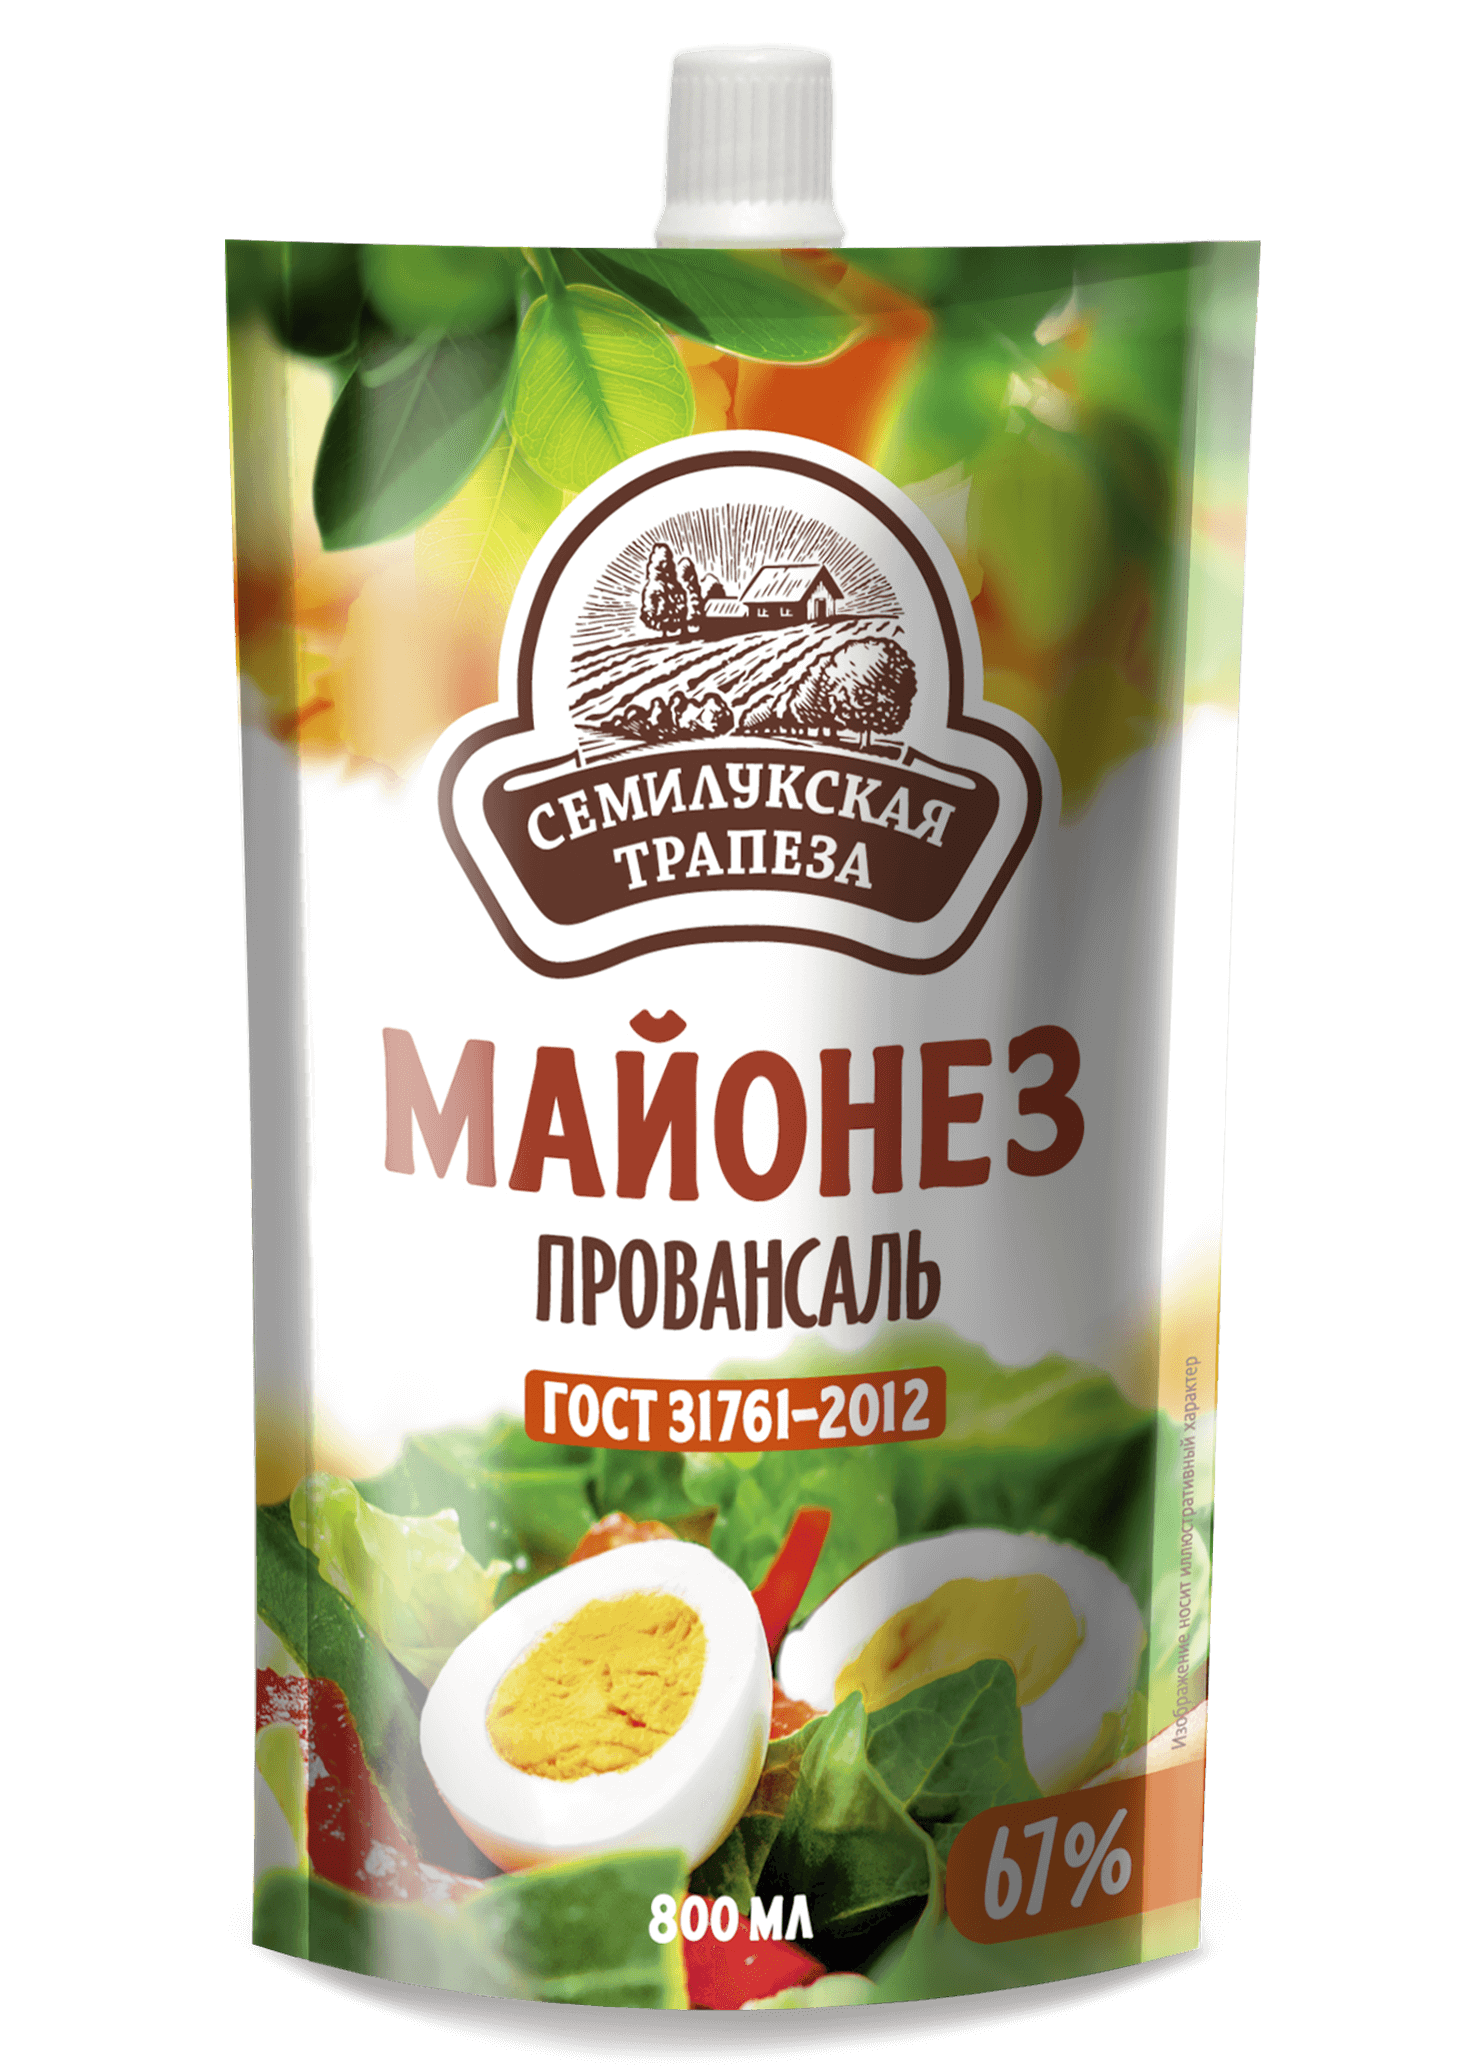 Mayonnaise "Semilyukskaya trapeza" Provencal 800 ml 67%